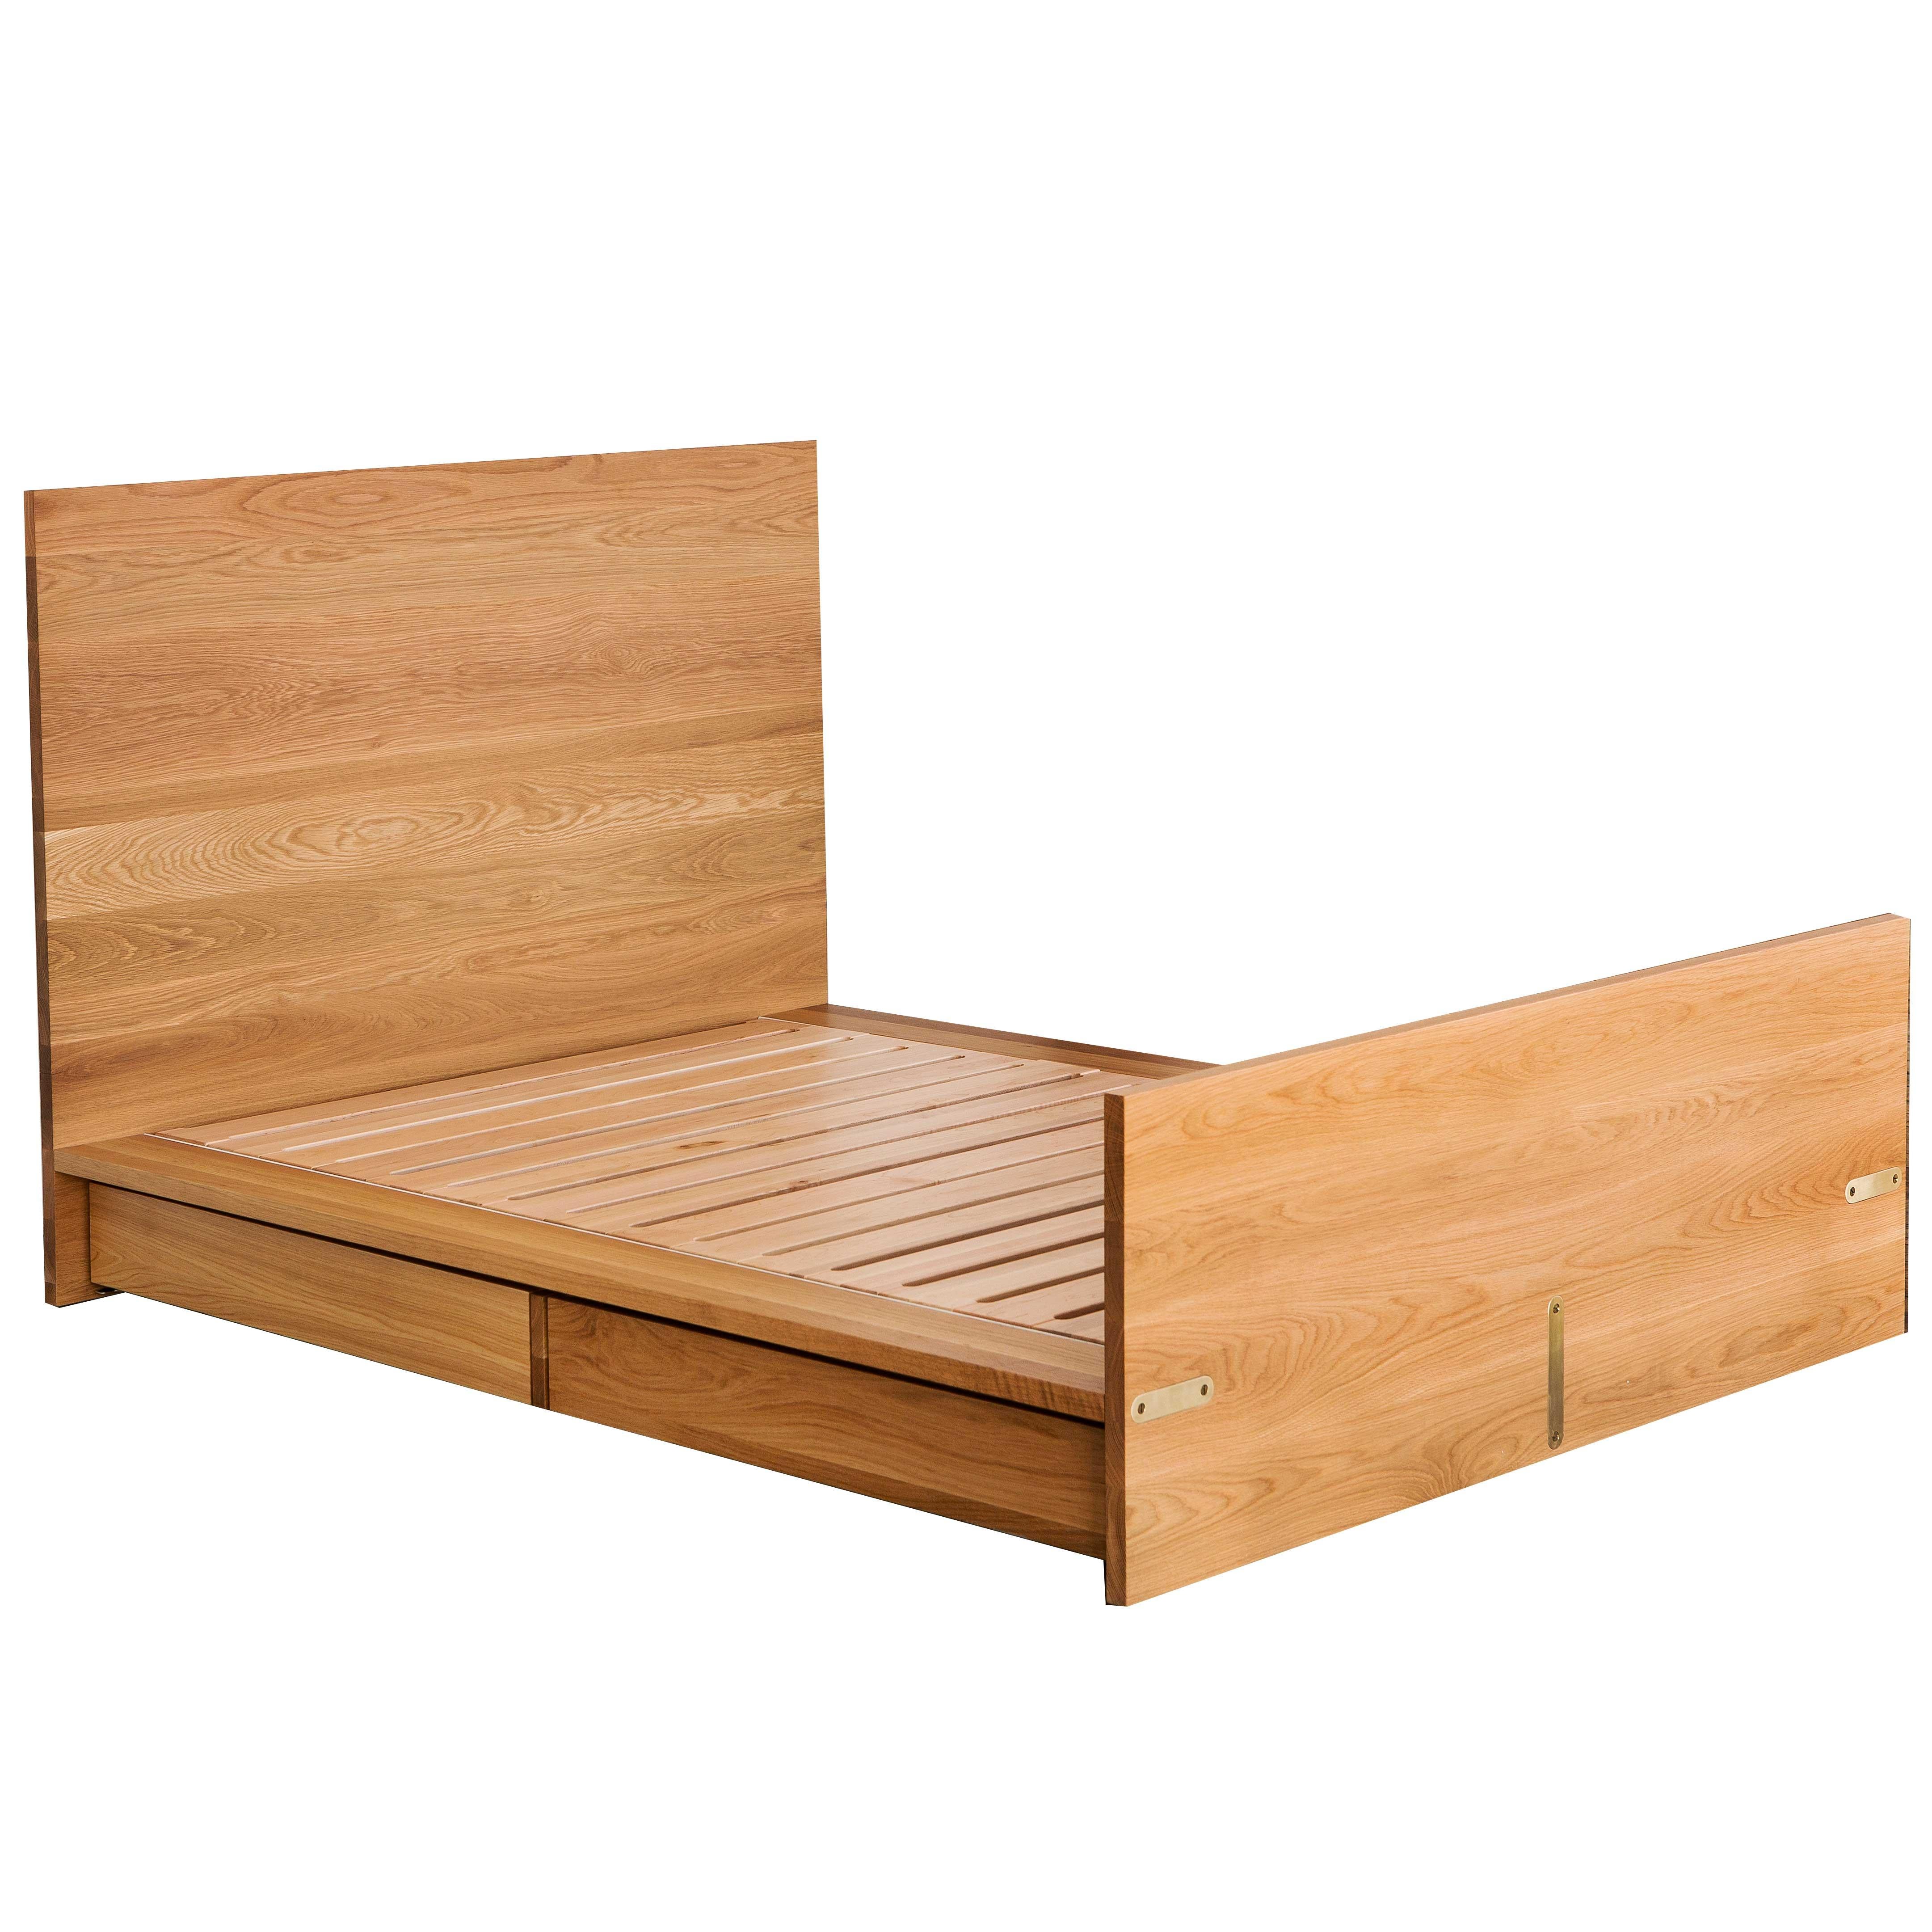 Contemporary White Oak Platform Bed, Platform Bed Frame With Drawers